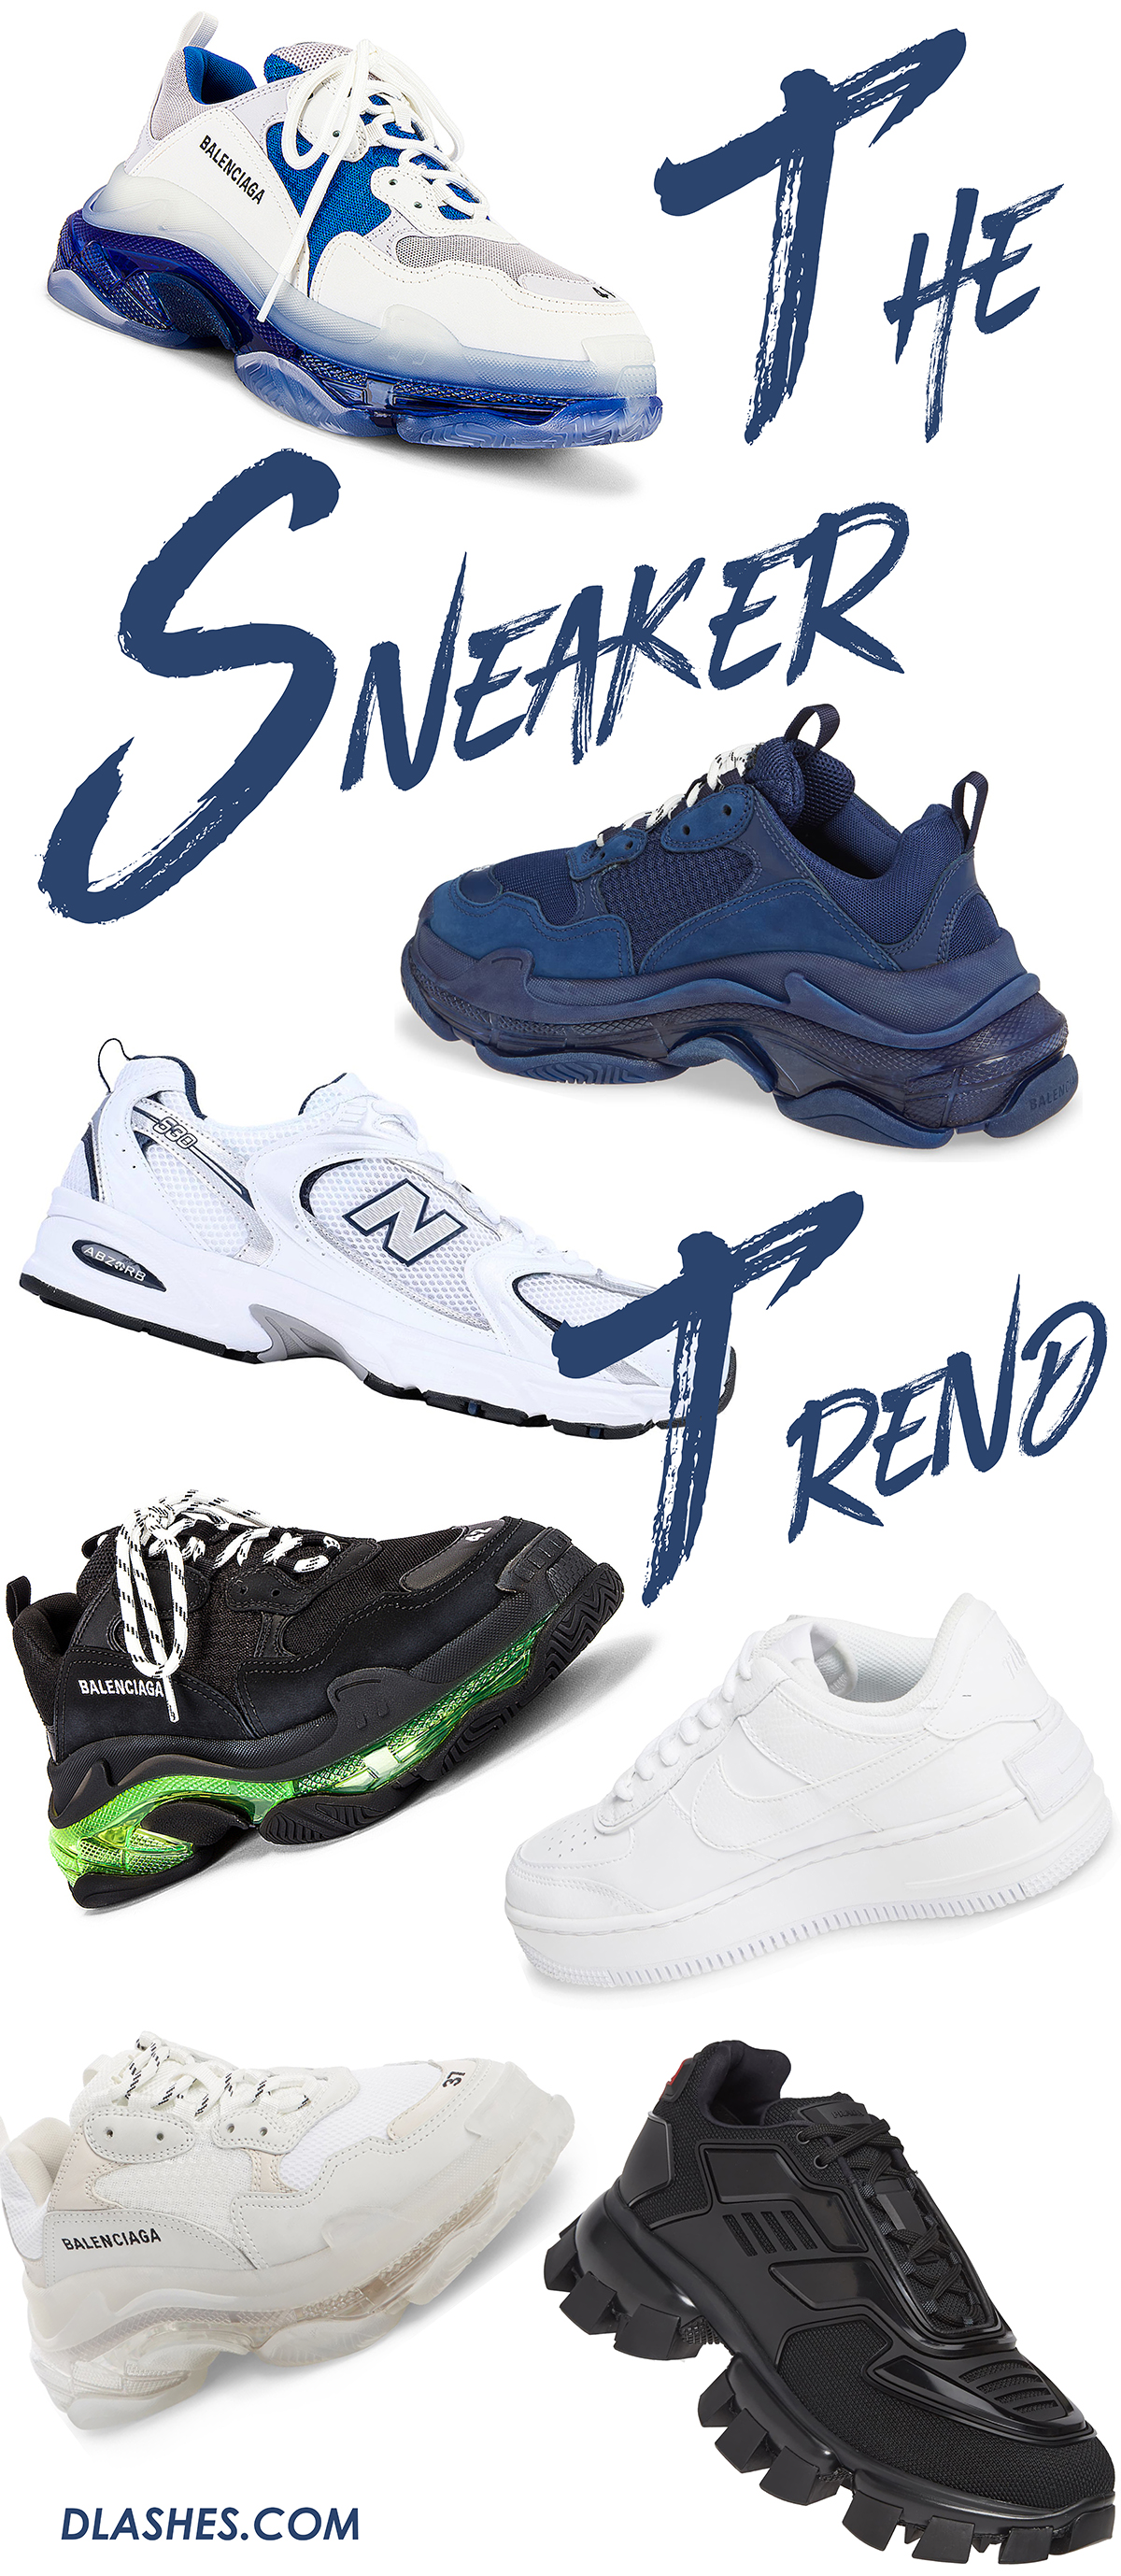 The Sneaker Trend